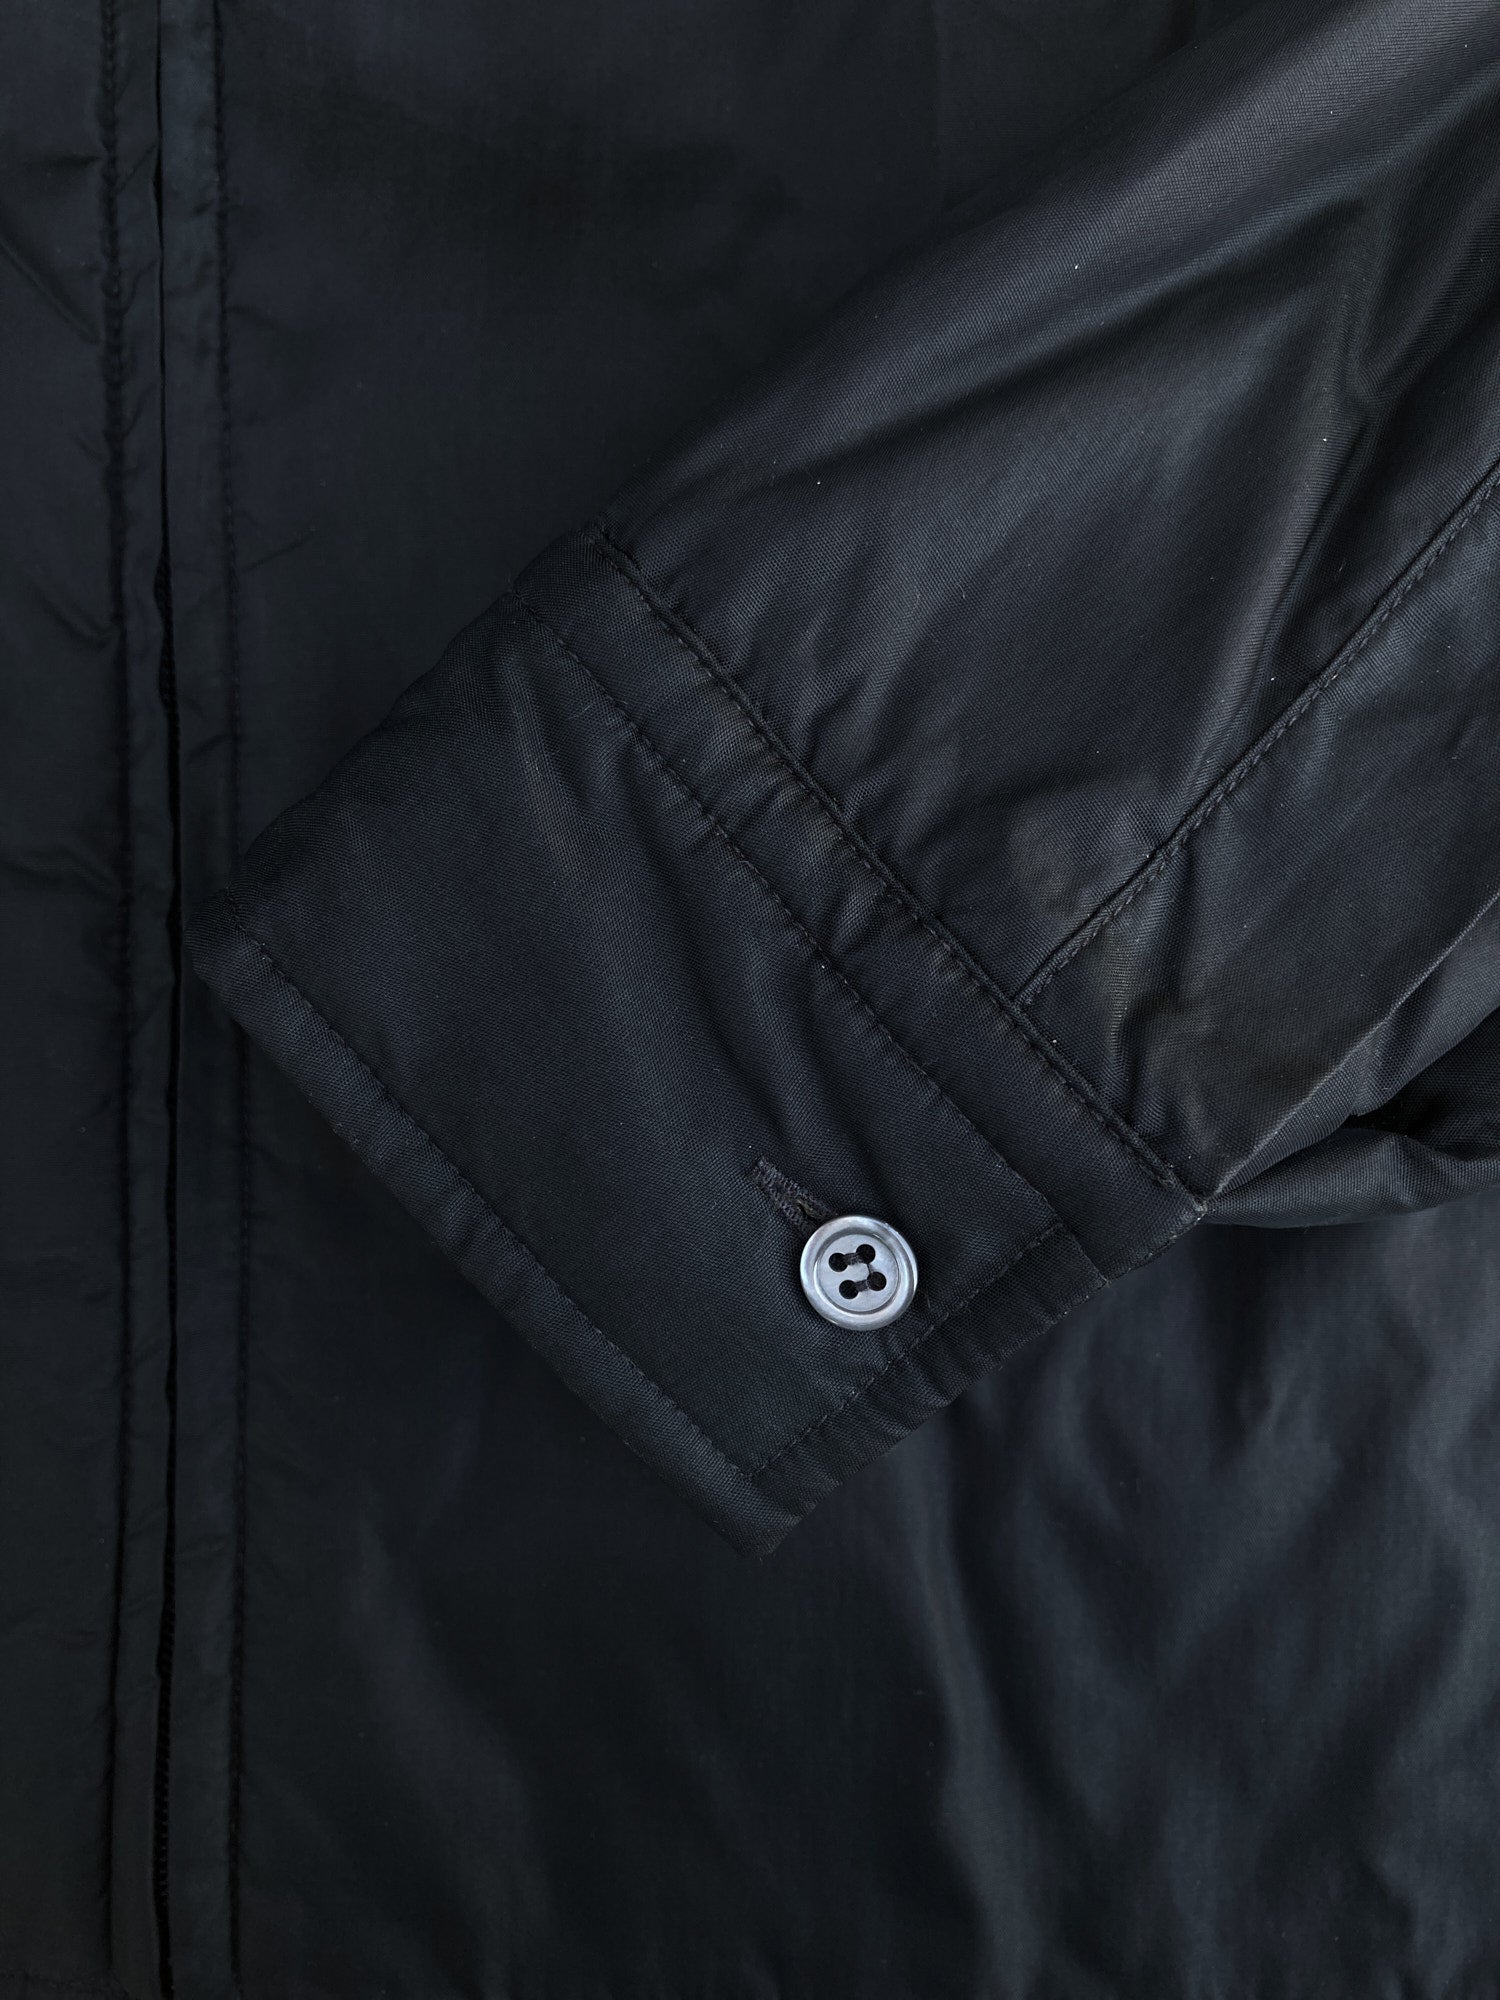 Samsonite 1990s black padded zip front shirt jacket - mens S